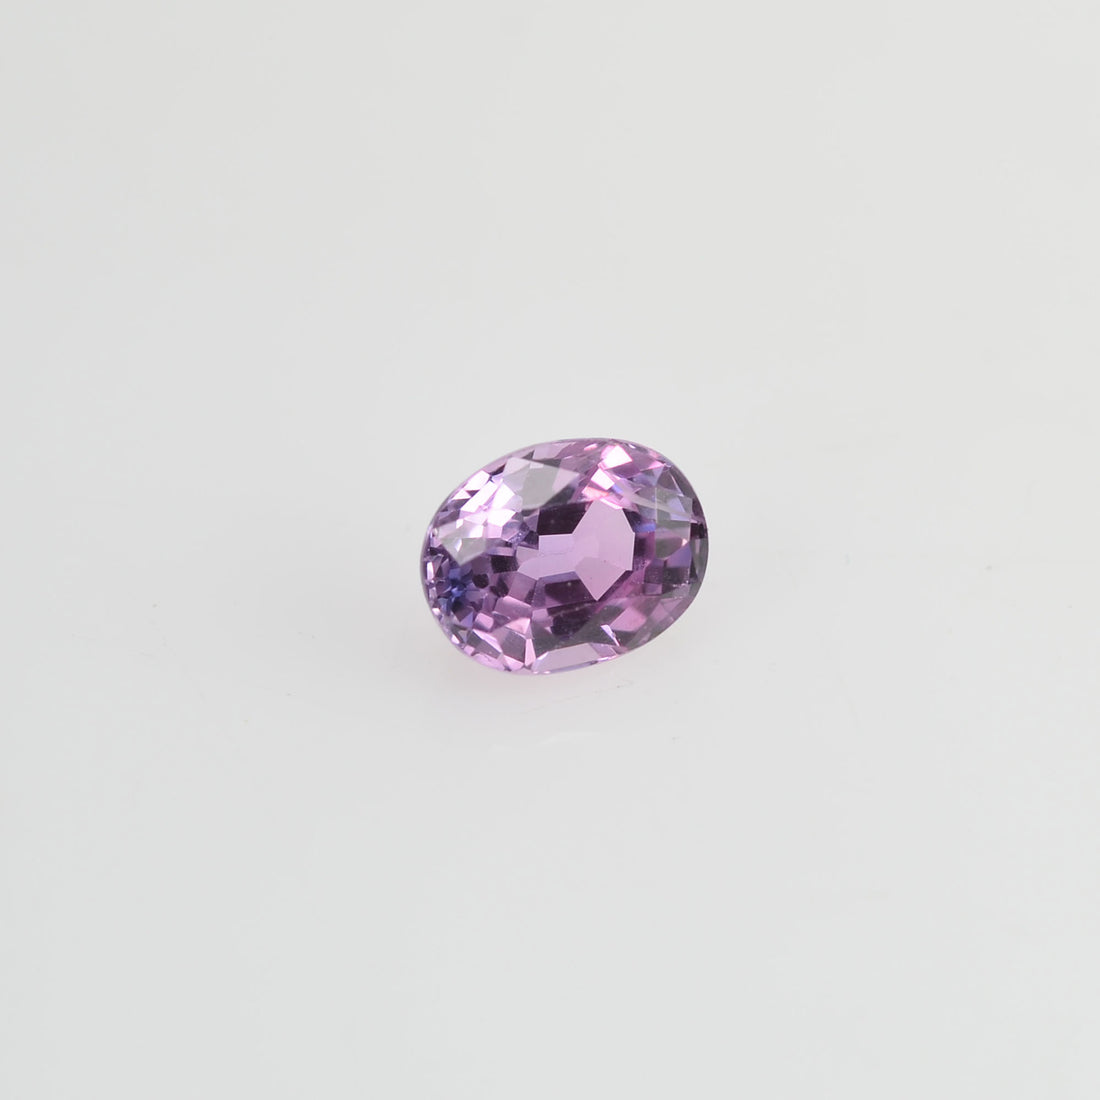 0.28 cts Natural Lavender Sapphire Loose Gemstone Oval Cut - Thai Gems Export Ltd.